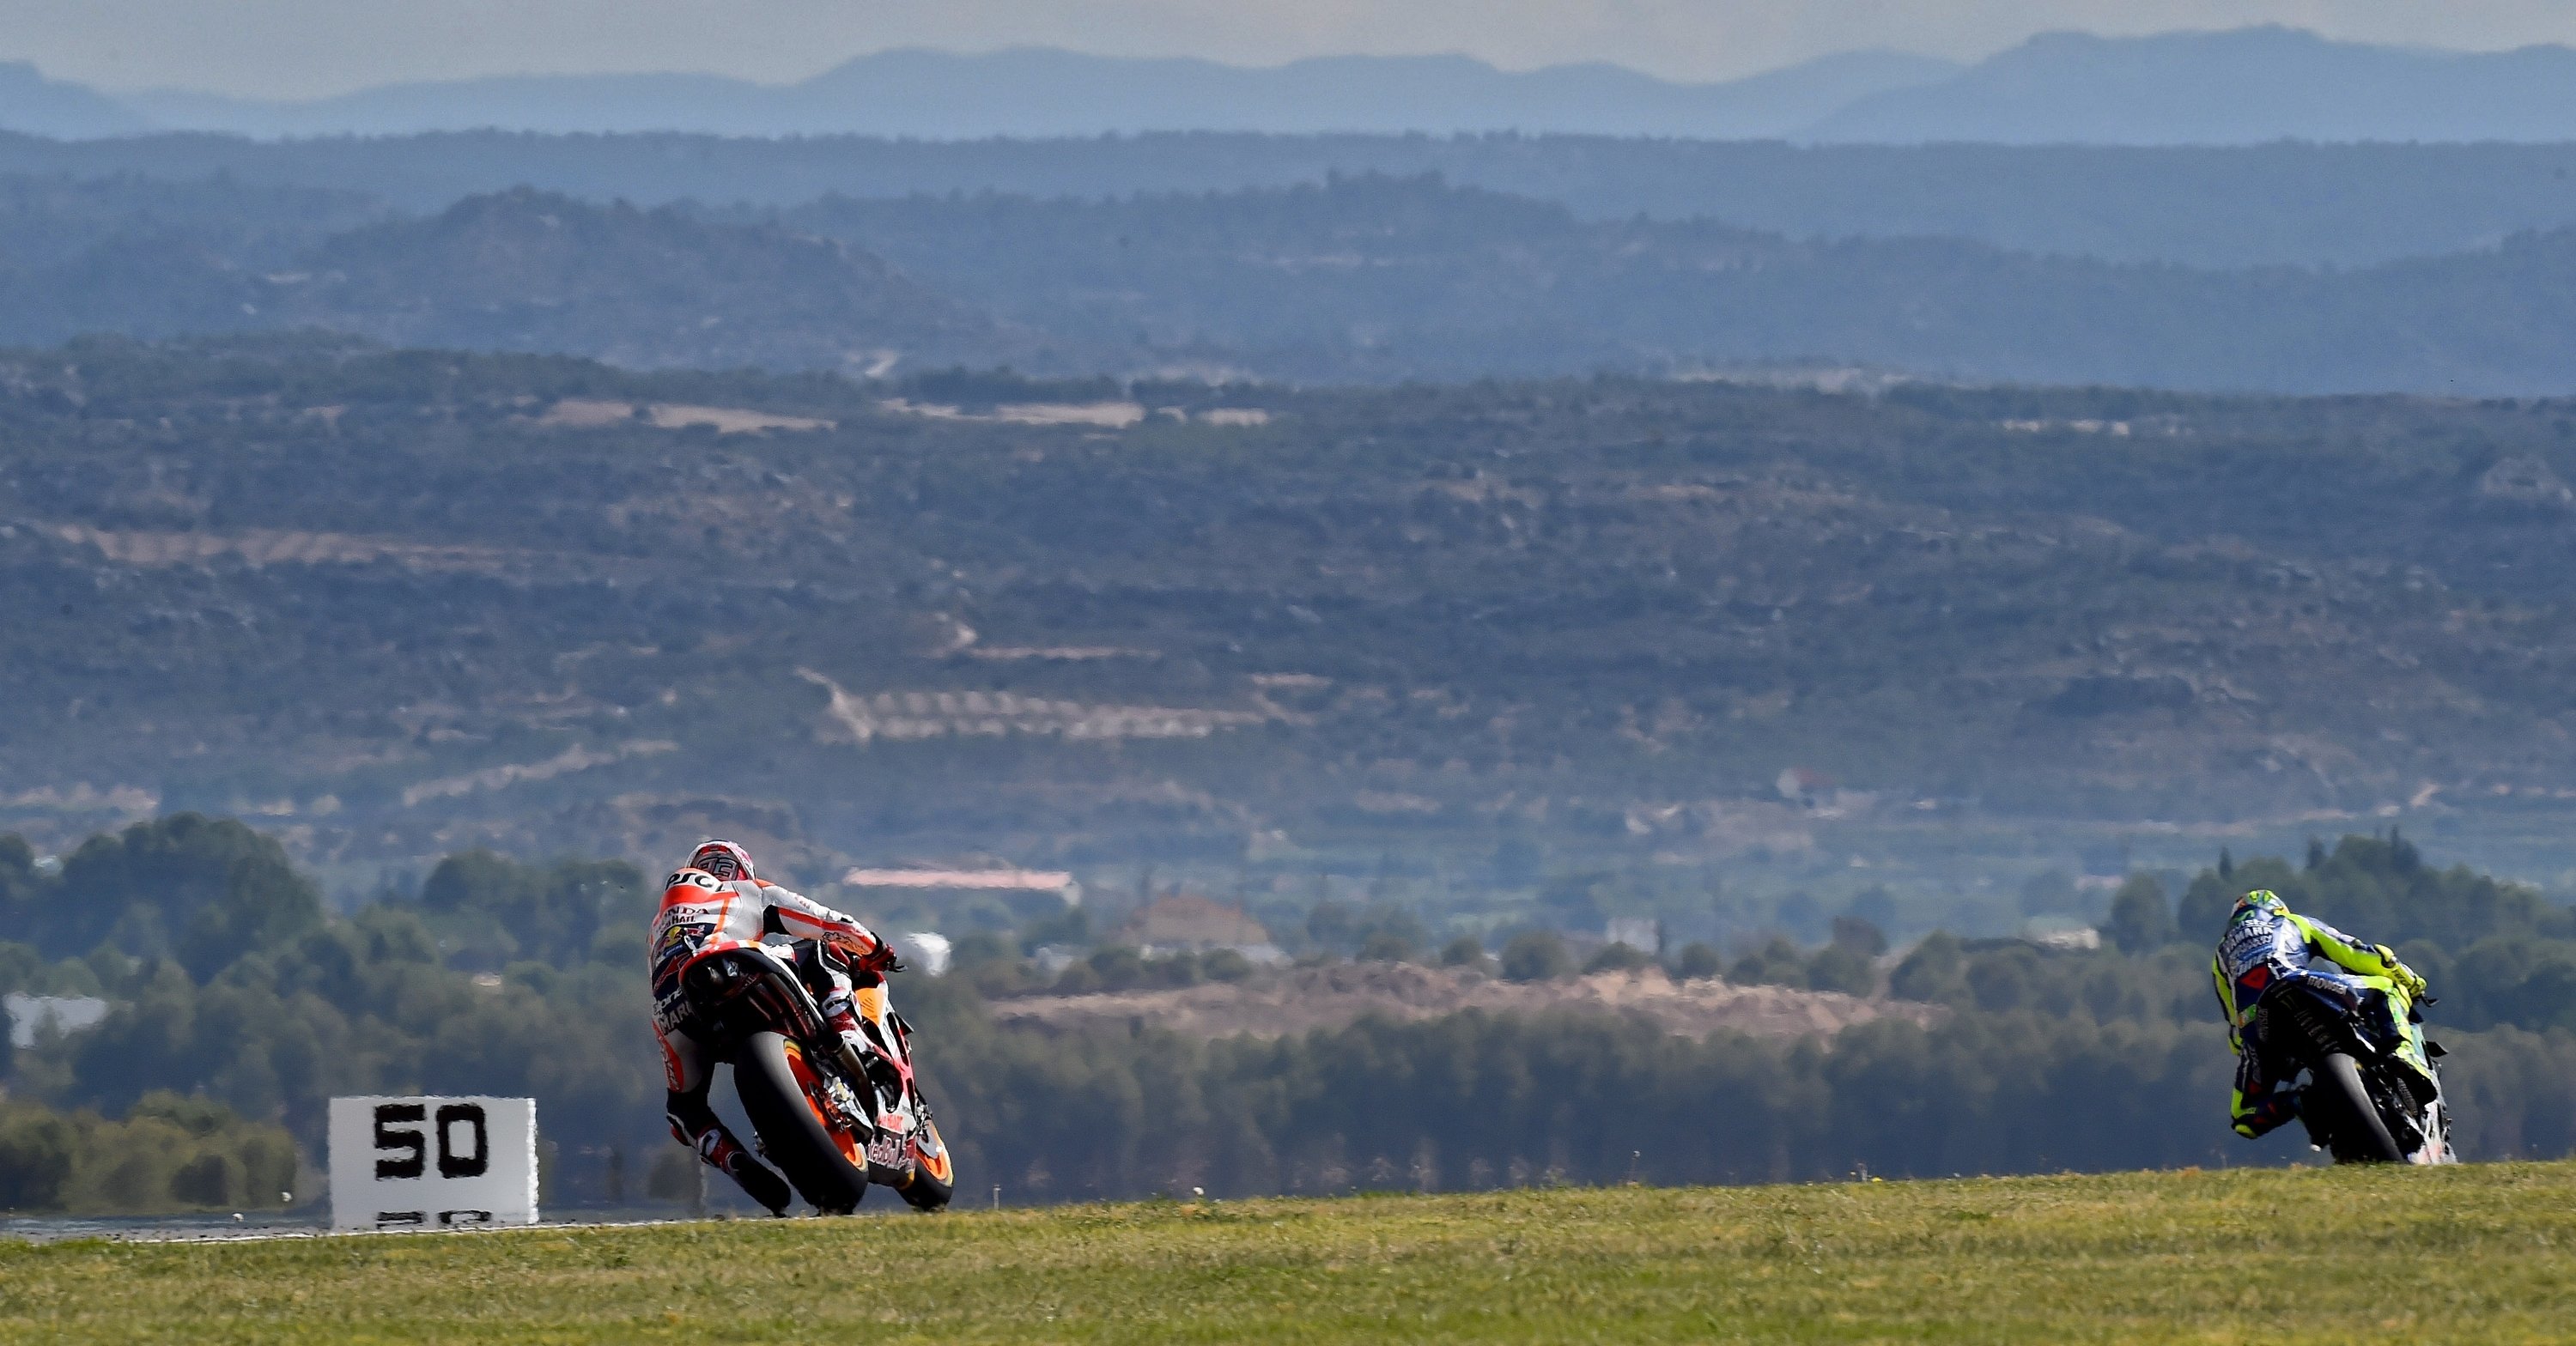 Chi vincer&agrave; la gara MotoGP di Aragon?